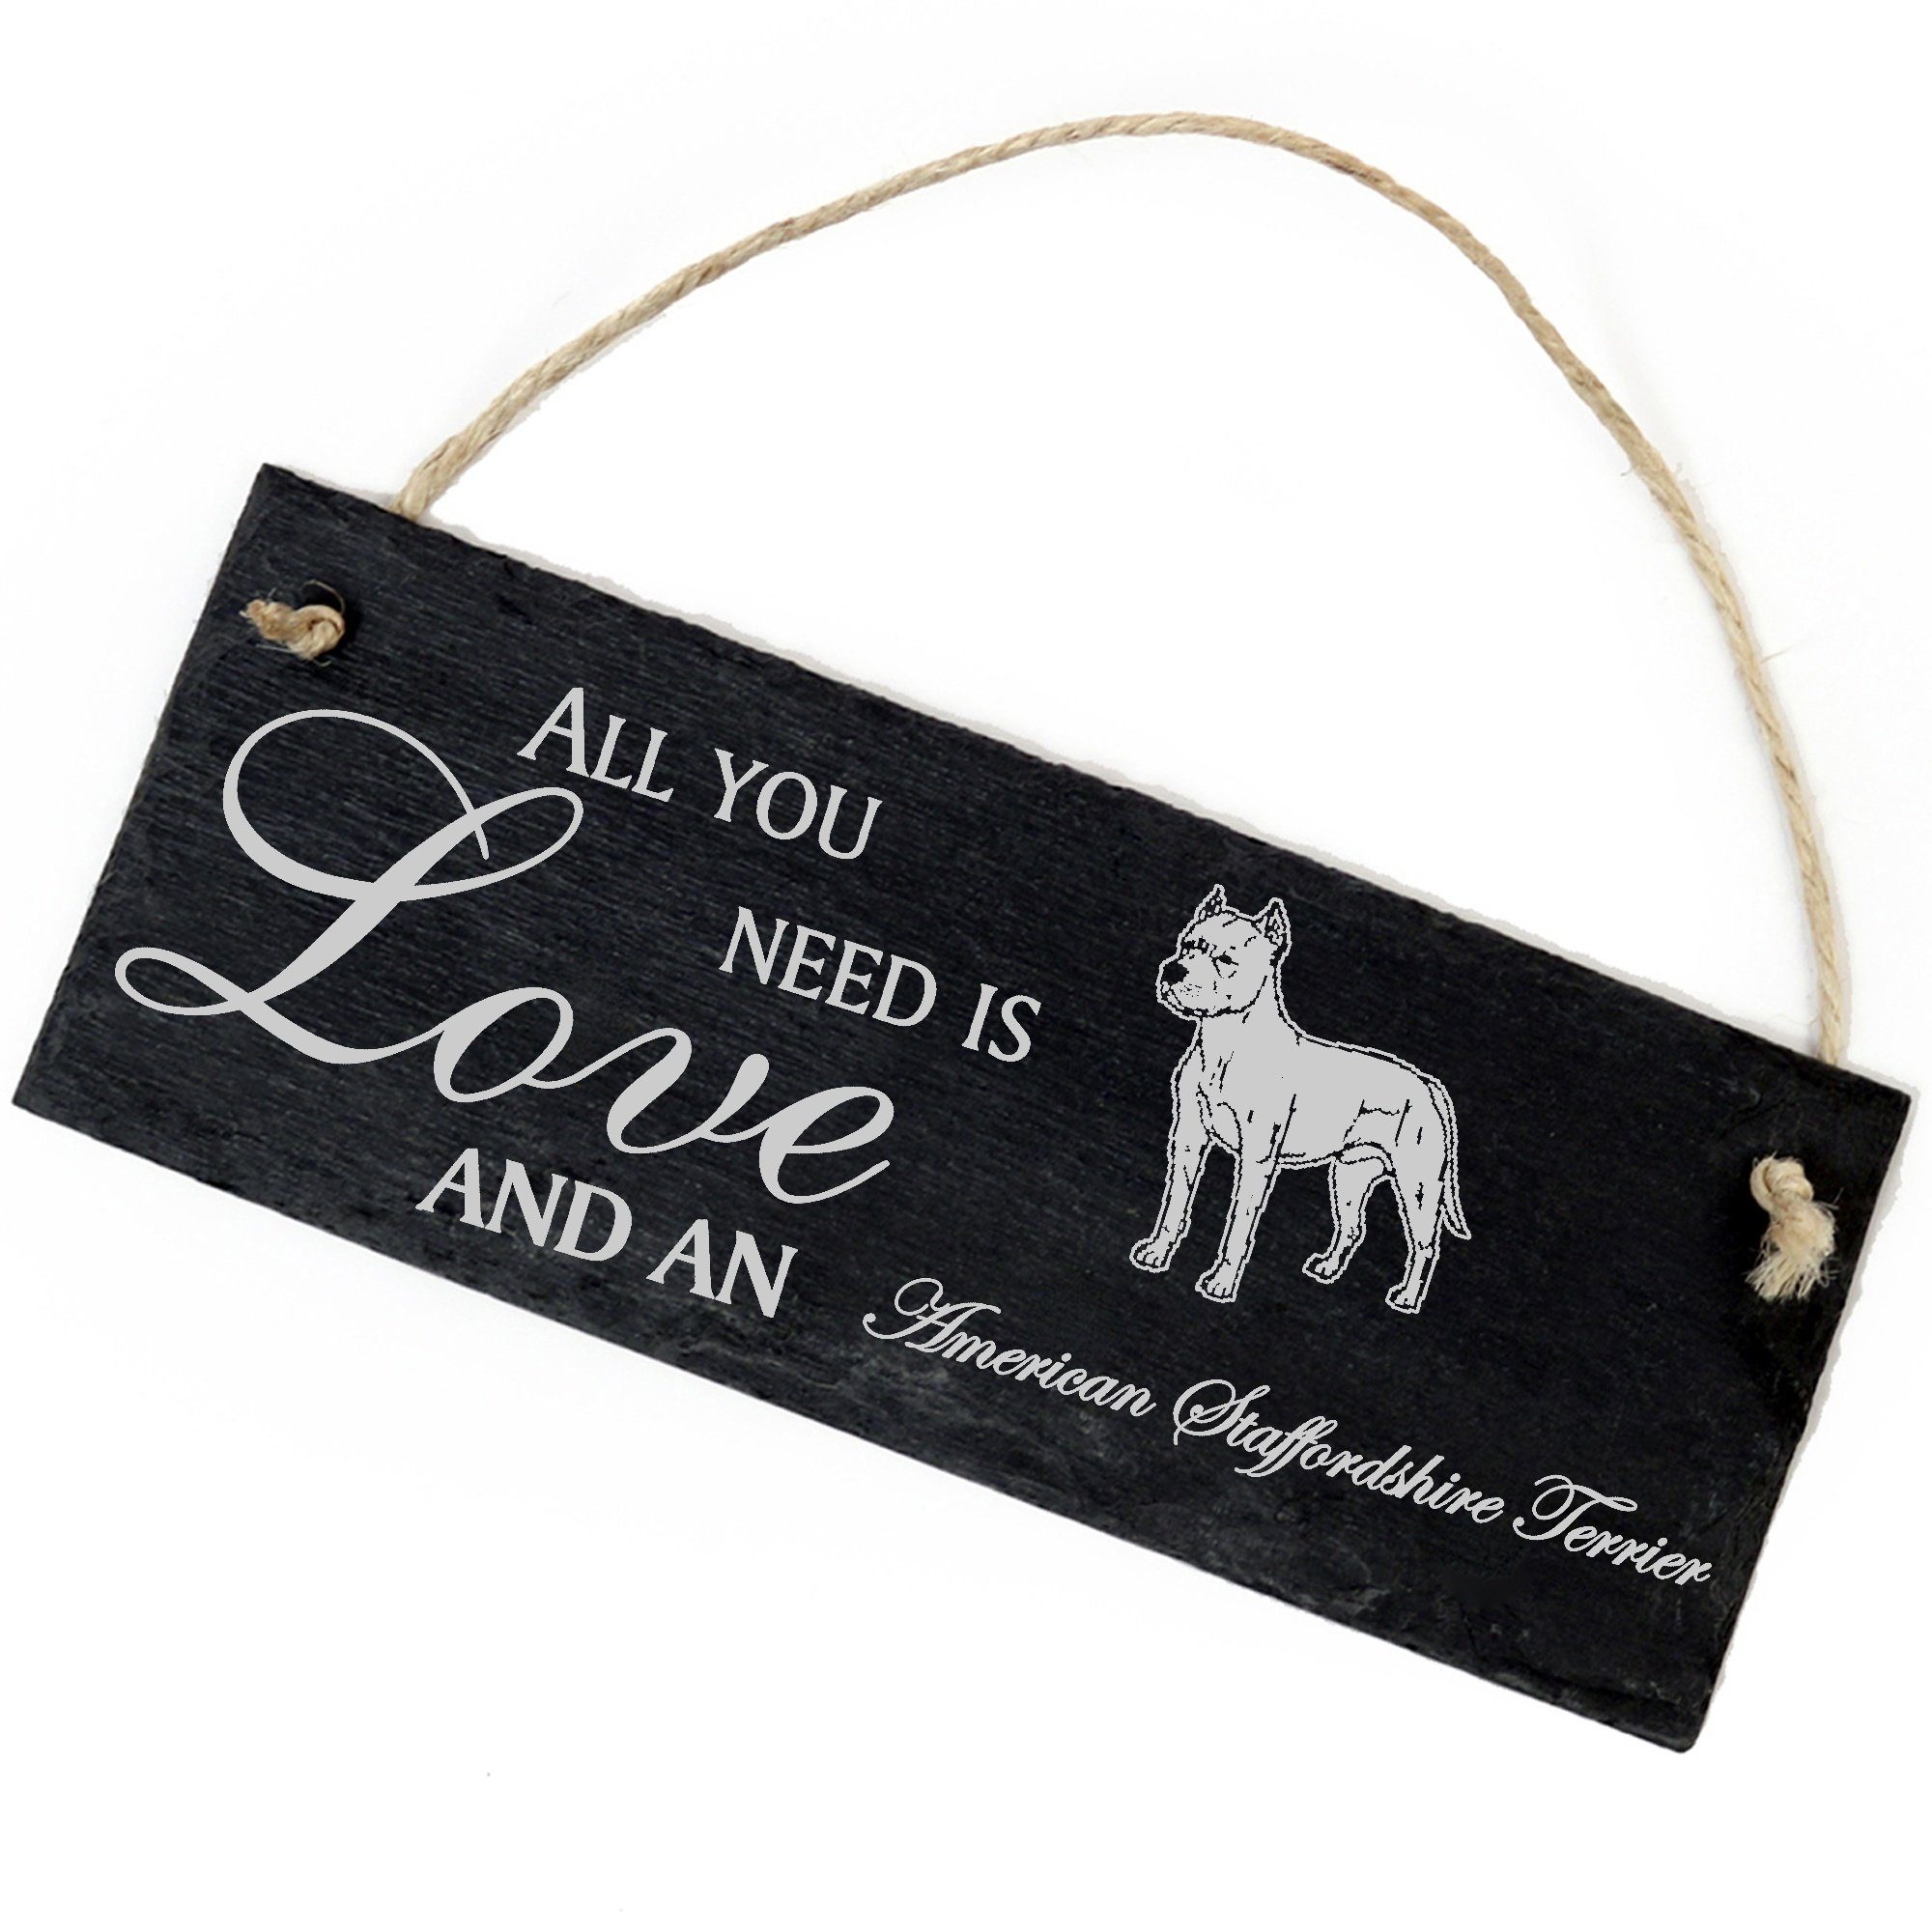 Dekolando Hängedekoration American Staffordshire Terrier 22x8cm All you need is Love and an Ame